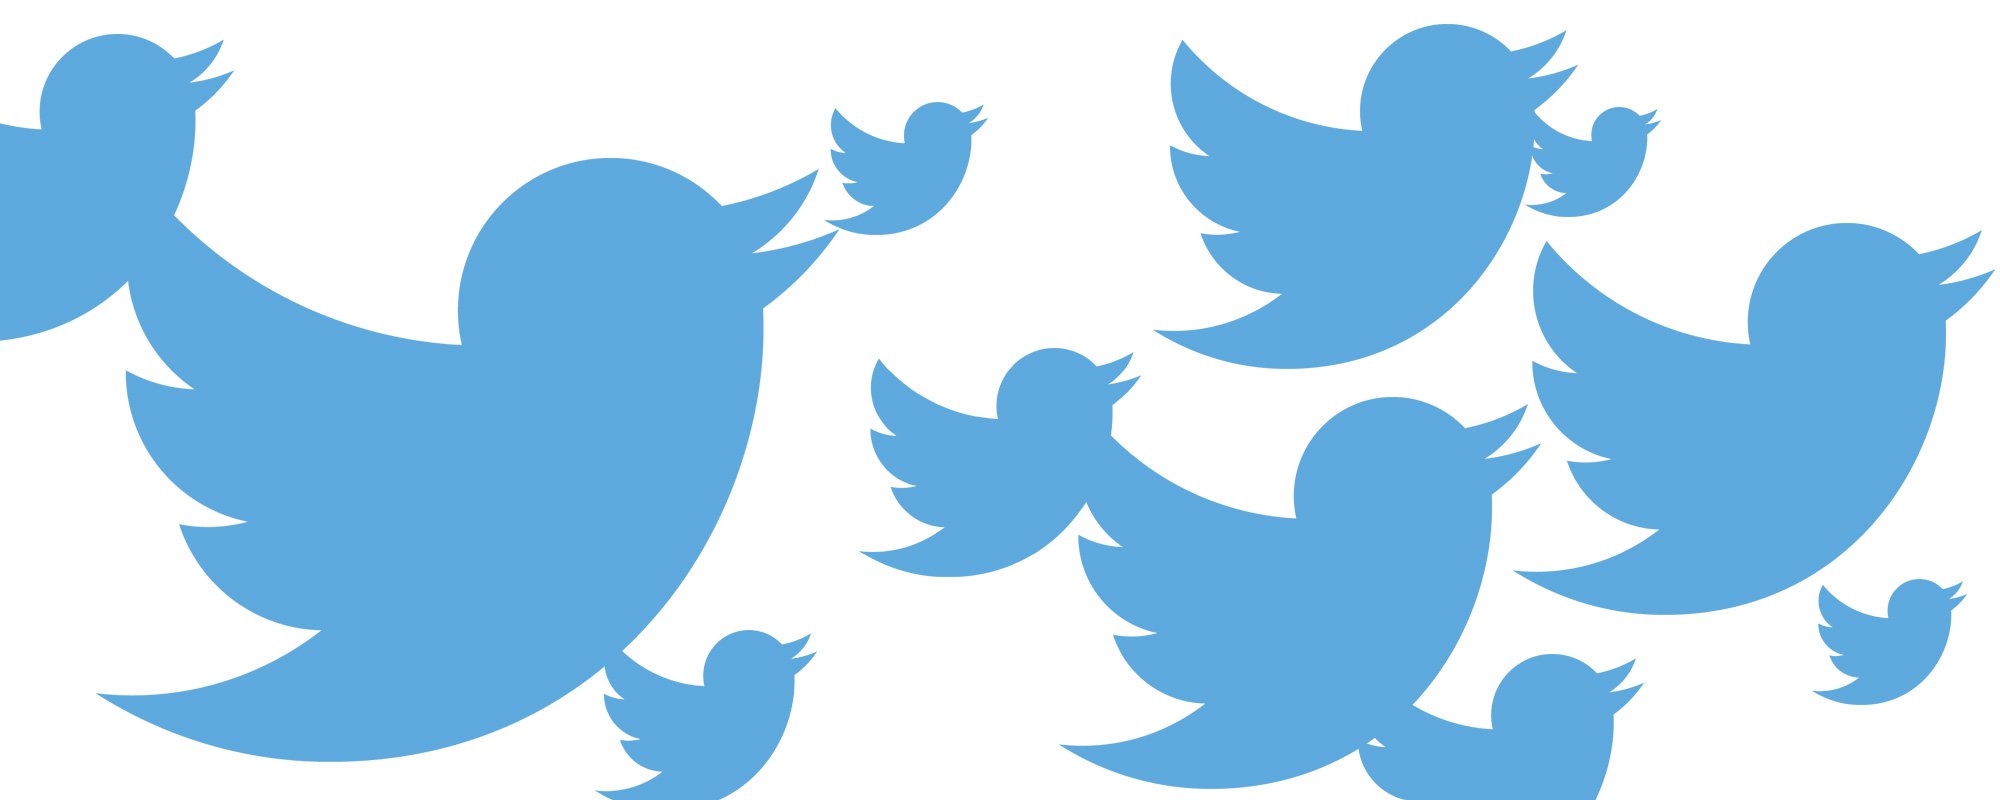 Passwörter 336 Millionen Twitter-Nutzer kompromittiert waren wegen Baga